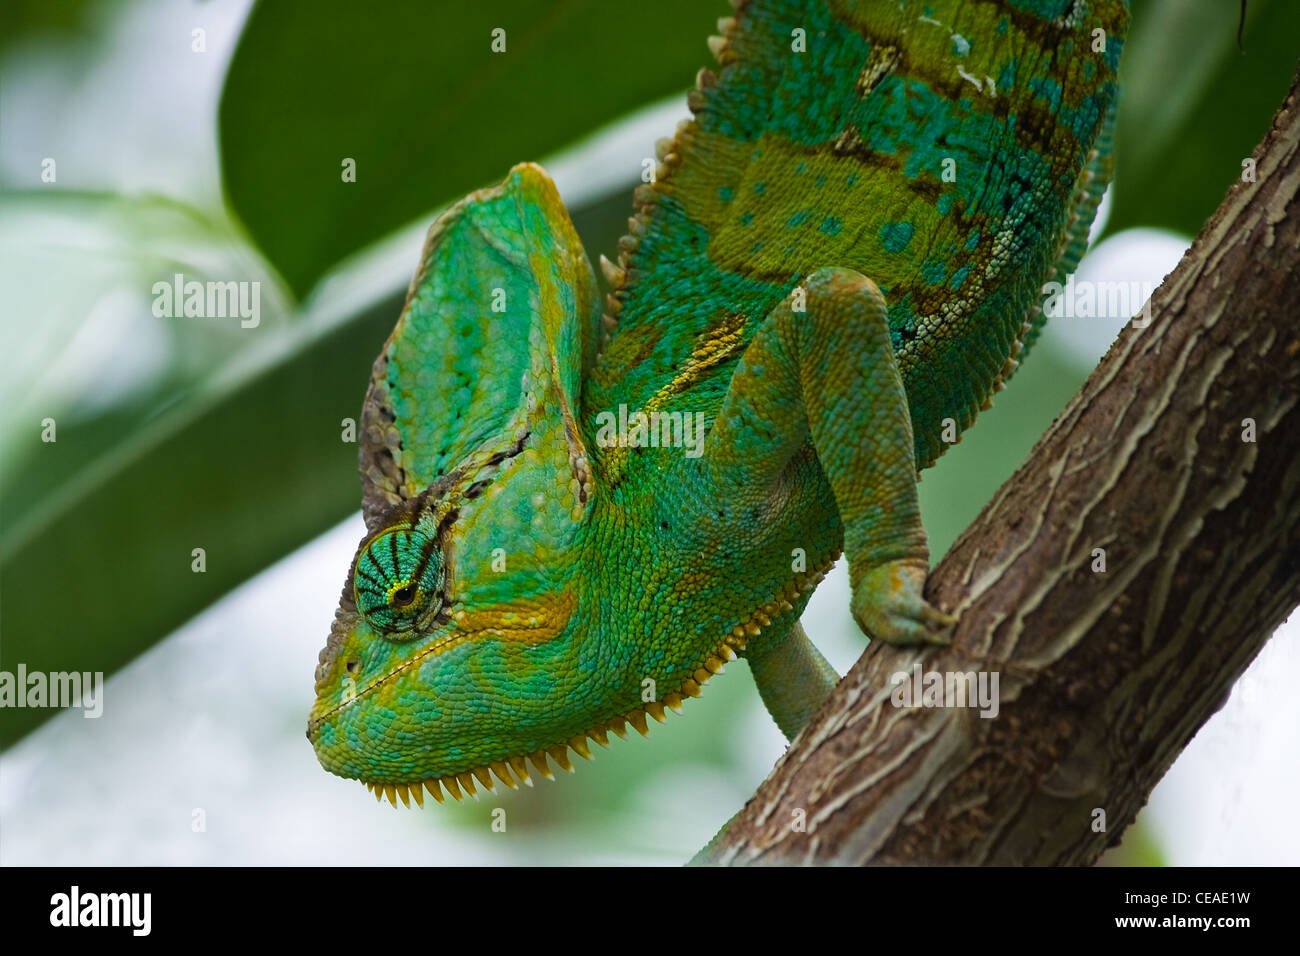 Beautiful green Jemen chameleon or Chamaelio calyptratus climbing in tree Stock Photo